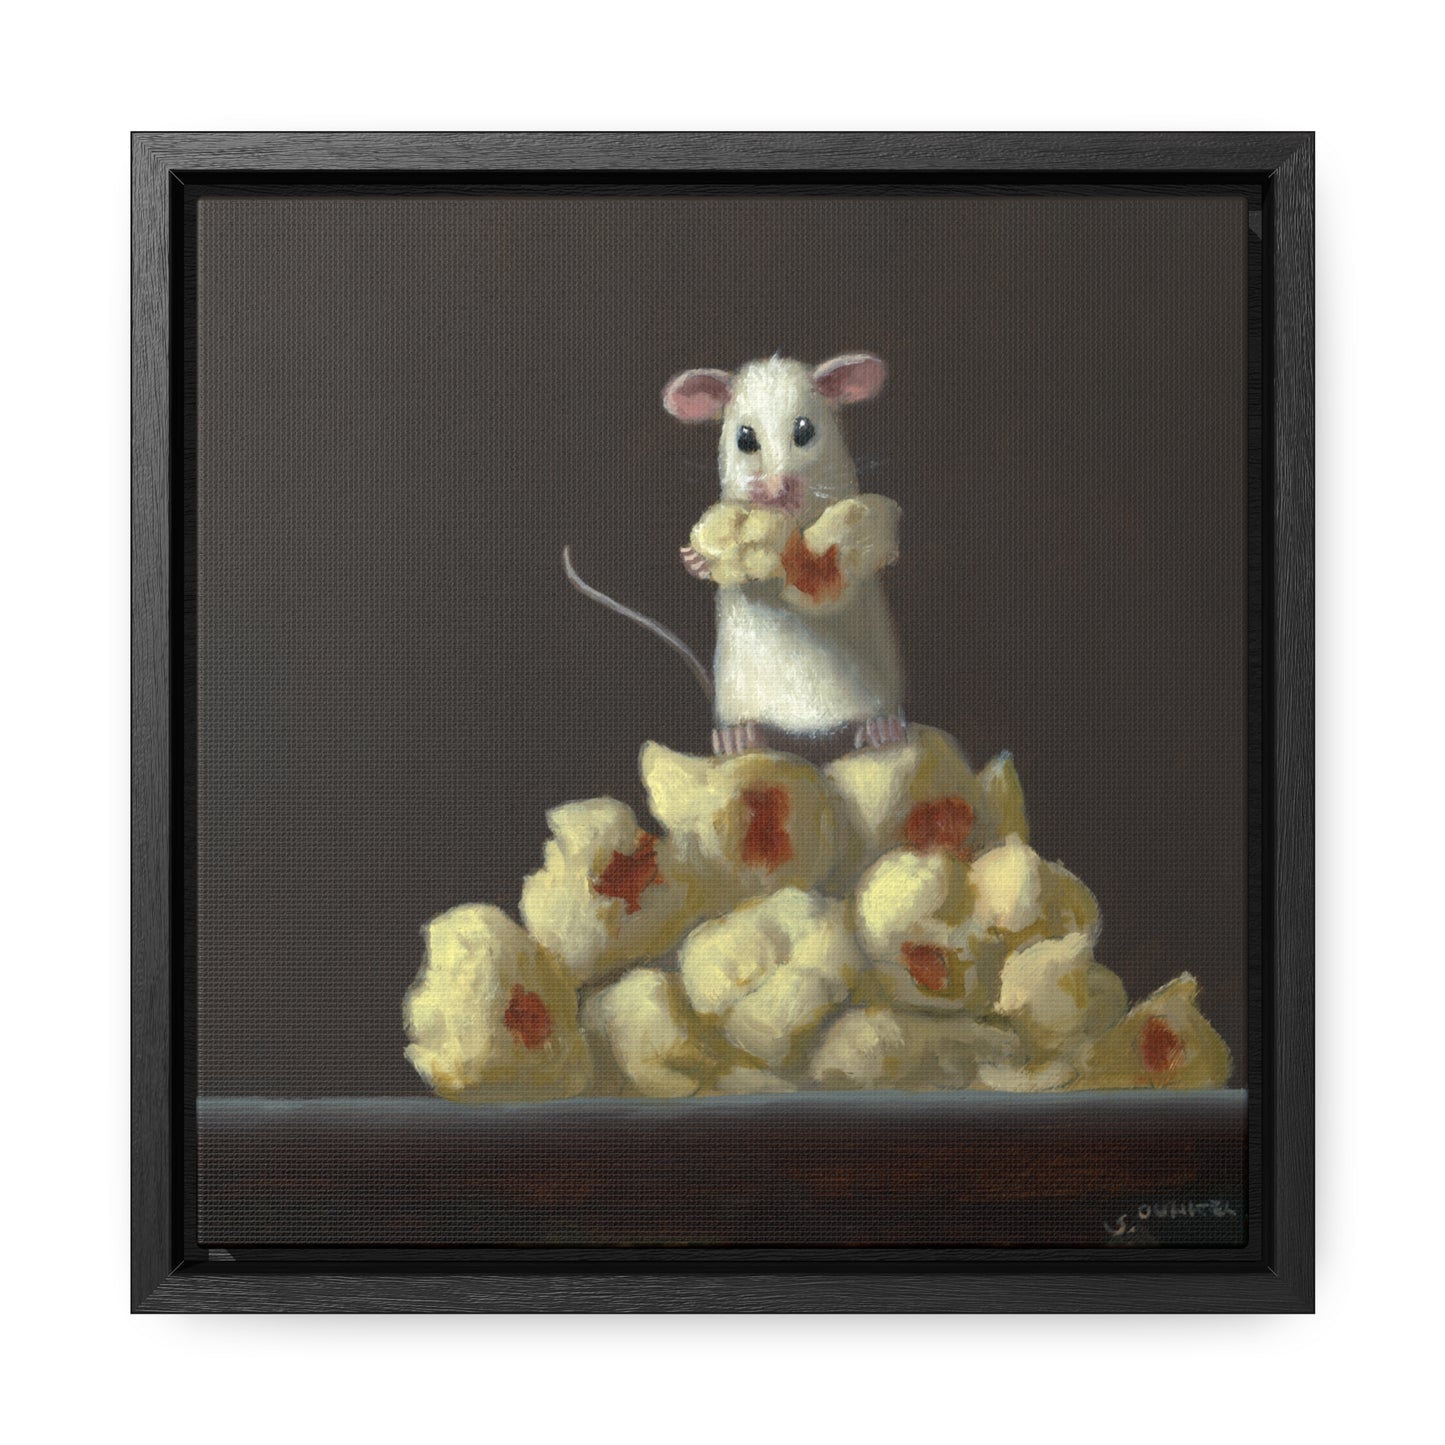 Stuart Dunkel: "More Butter" - Framed Canvas Reproduction